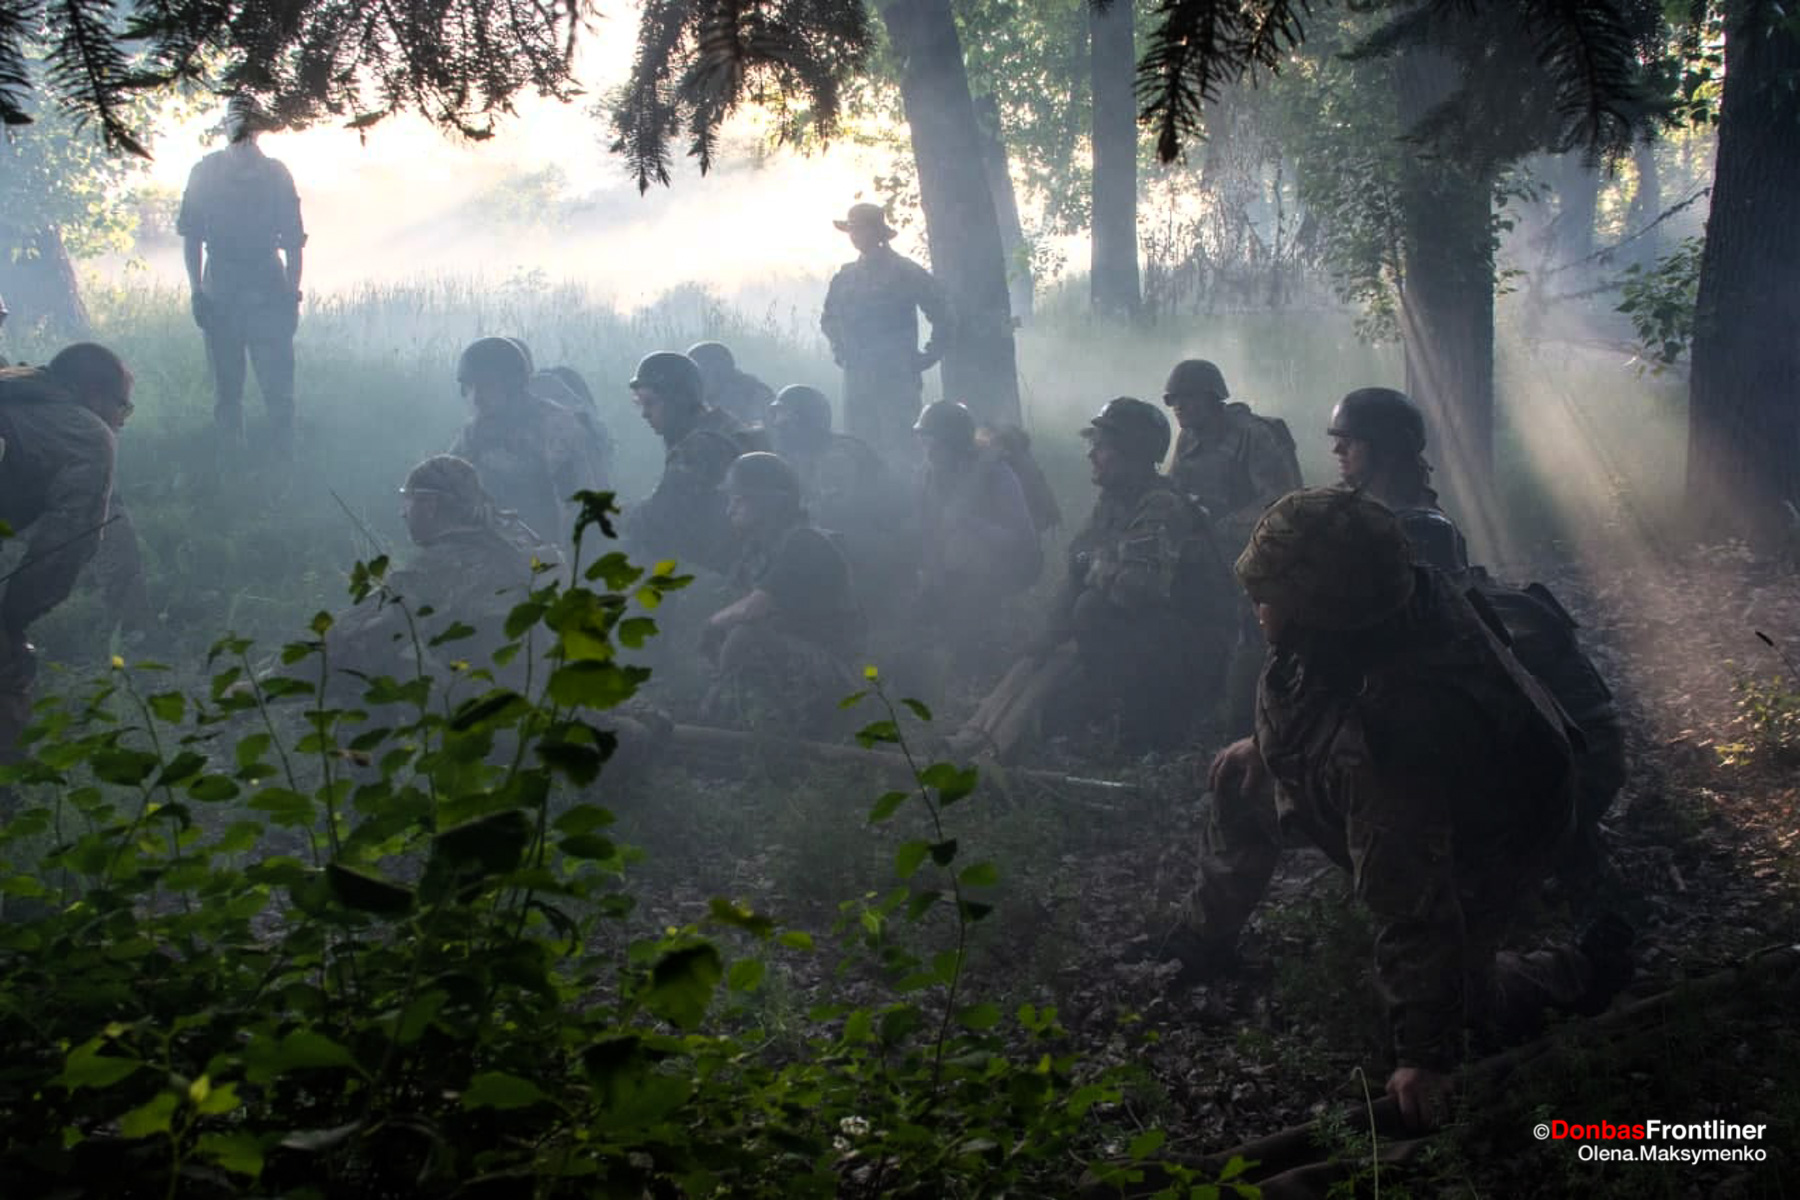 Ukraine War / Donbas Frontliner /  Hospitaliers paramedic cadets walkthrough of an evacuation using smokescreens